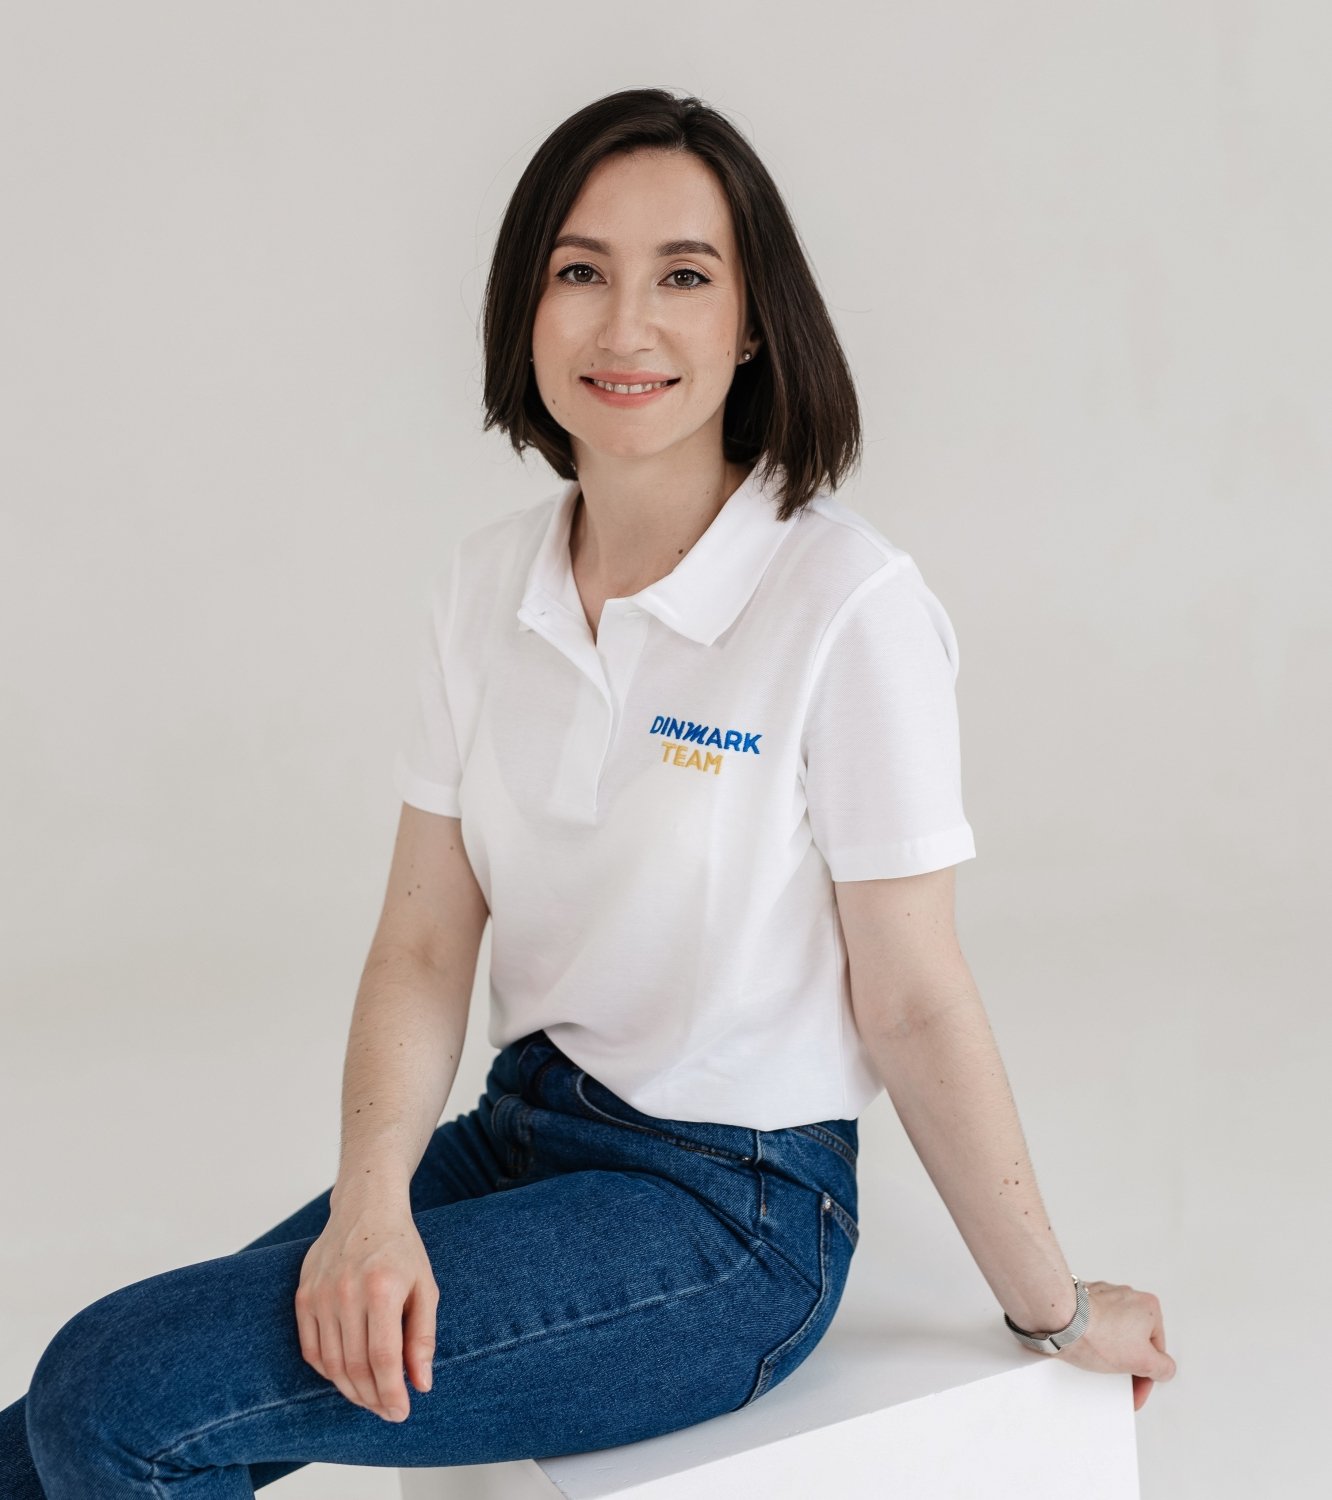 Vasylyna Kharkhalis / Chief Marketing Officer